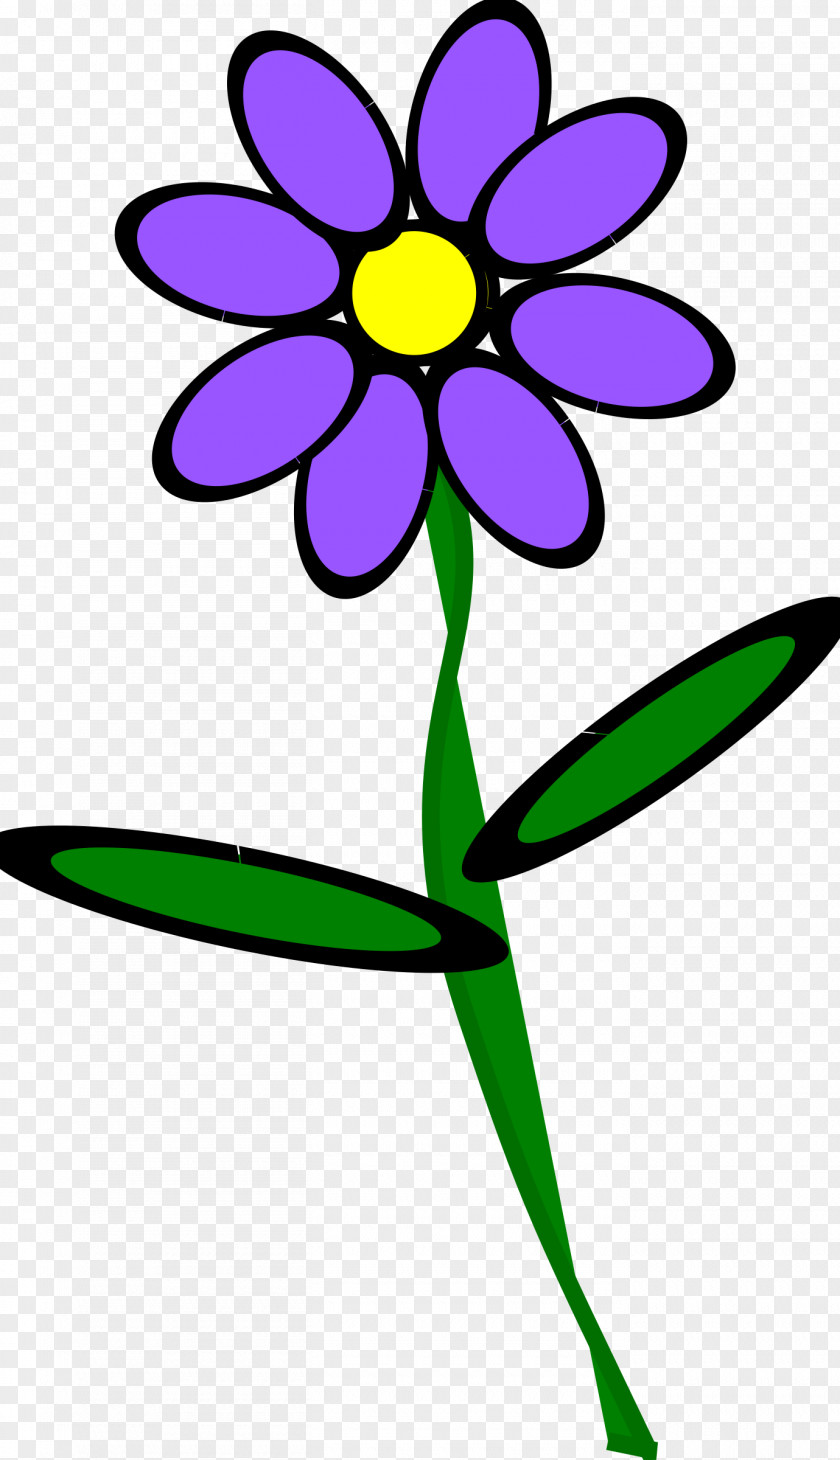 Purple Flower Four-leaf Clover Desktop Wallpaper Clip Art PNG